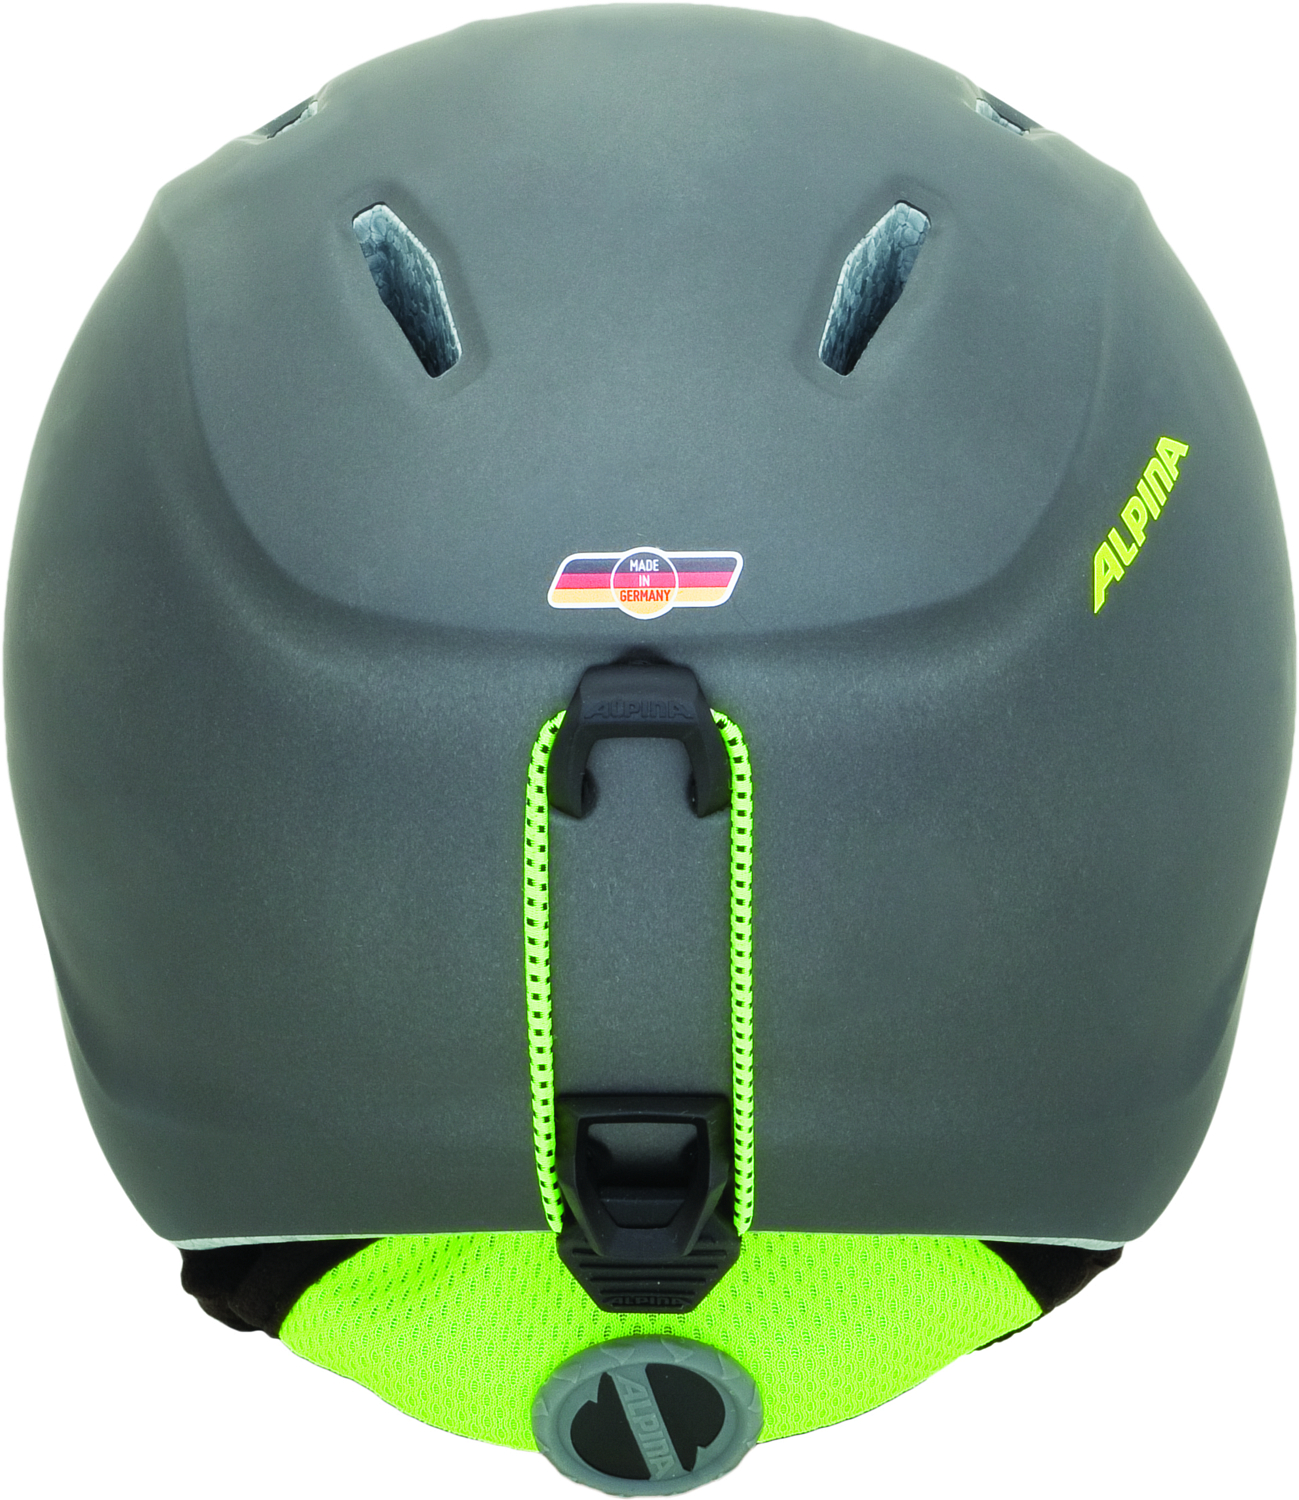 Шлем детский ALPINA Carat XT Charcoal/Neon Matt